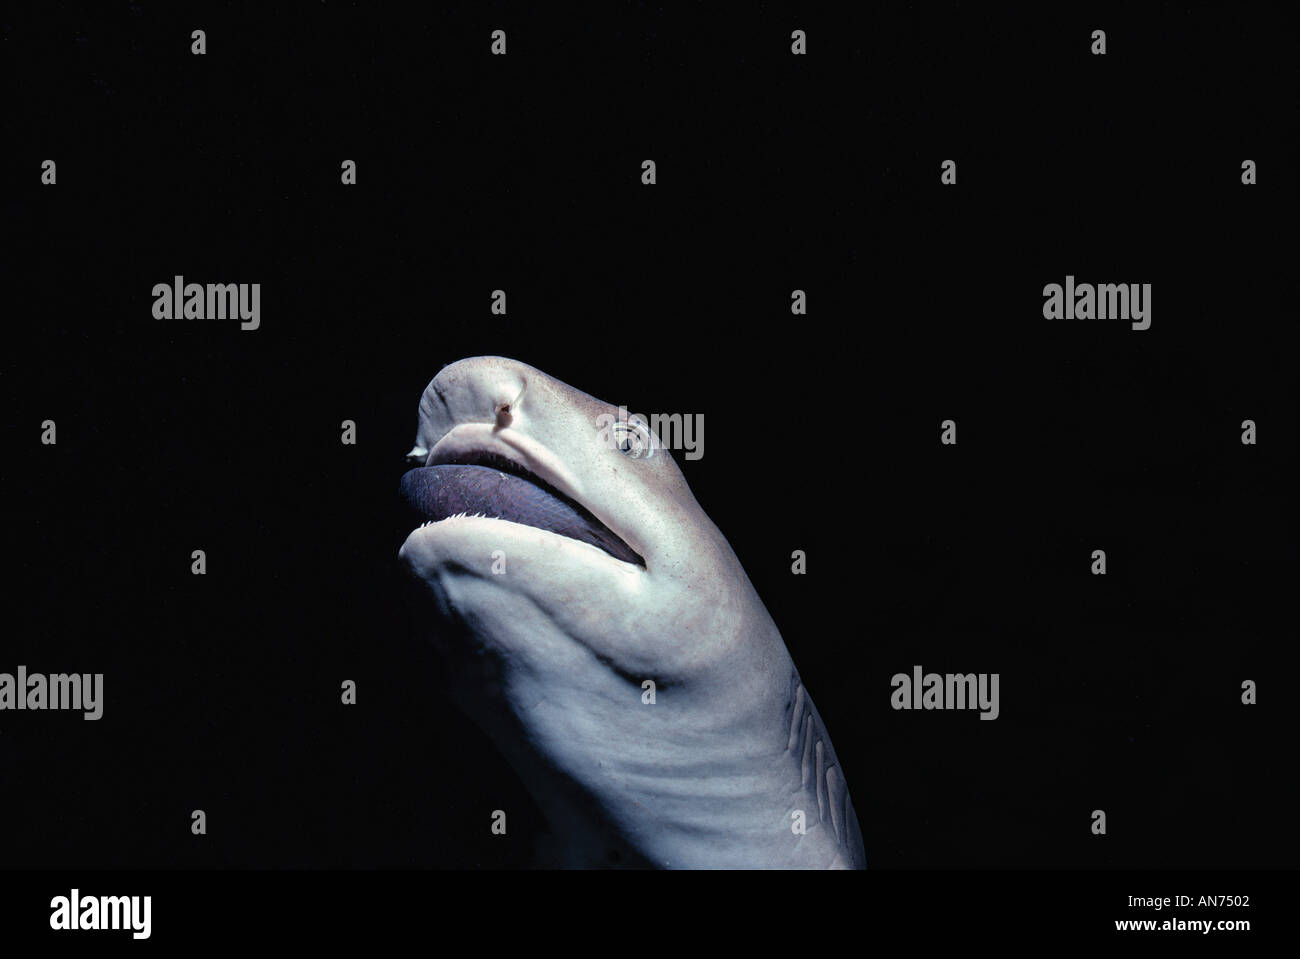 Whitetip Reef Shark eats a surgeonfish Stock Photo